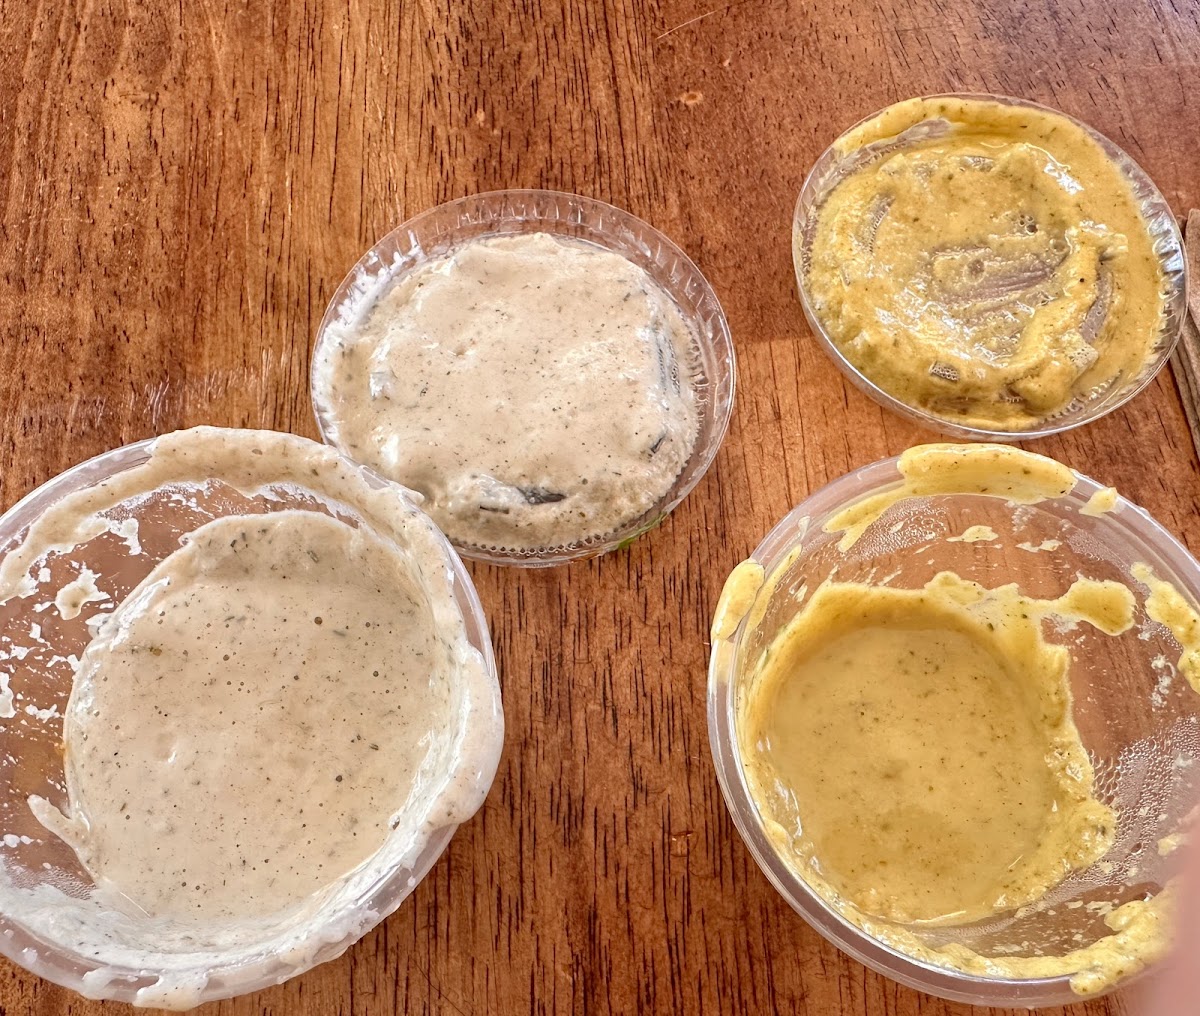 Ben's Ranch Sauce and Lemon Thyme Sauce